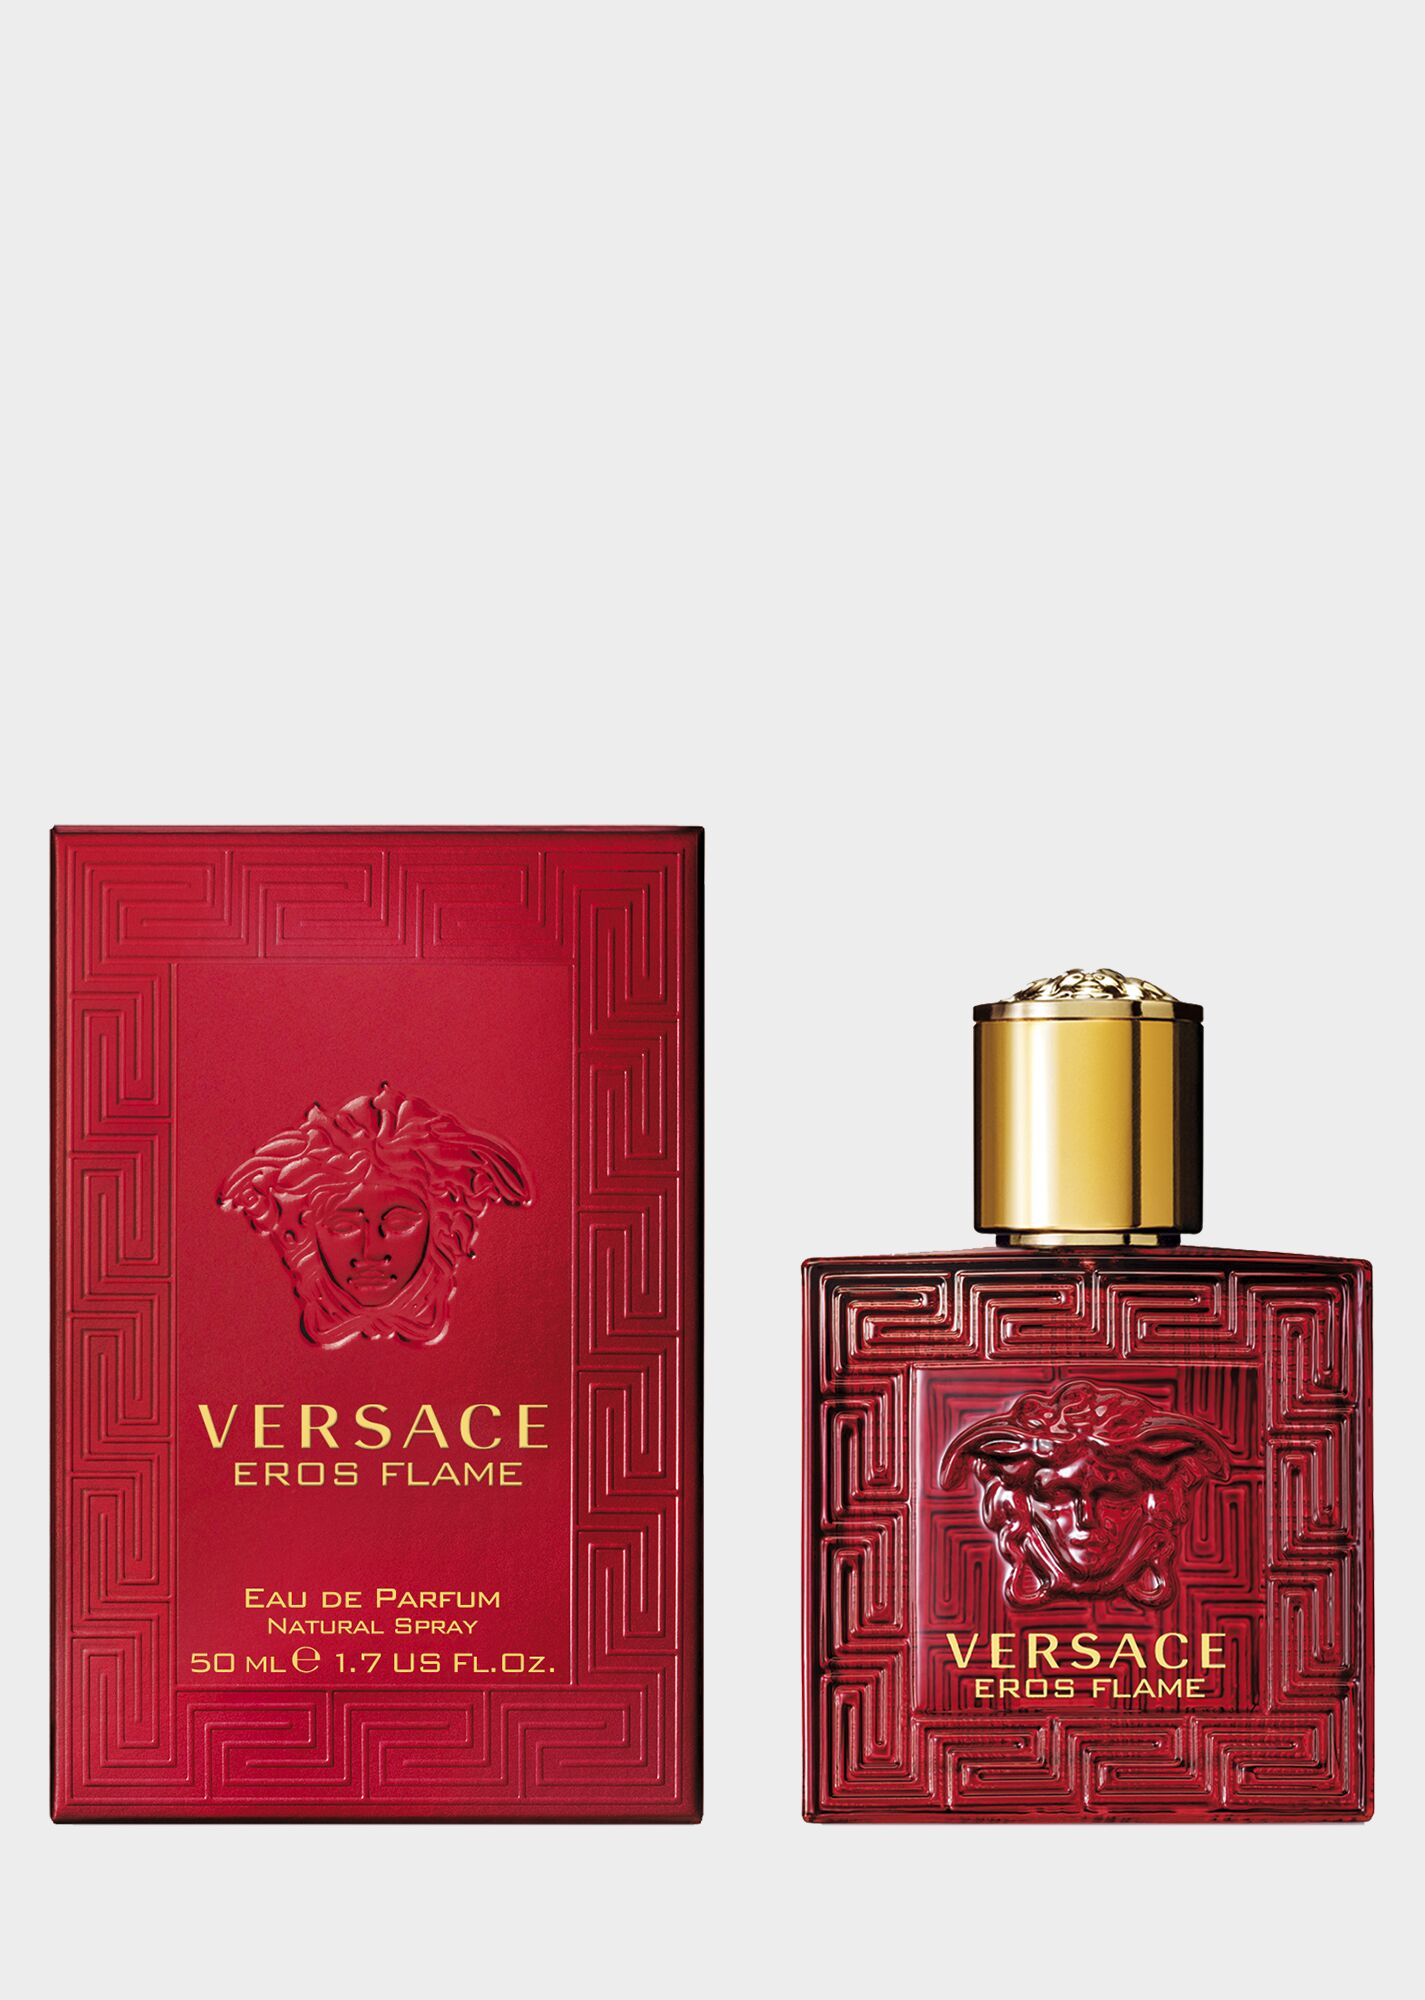 Версаче флейм. Eros Flame Versace 100 мл. Versace Eros Flame EDP 100 ml. Versace Eros Flame 100ml. Versace Eros мужской 50 мл.